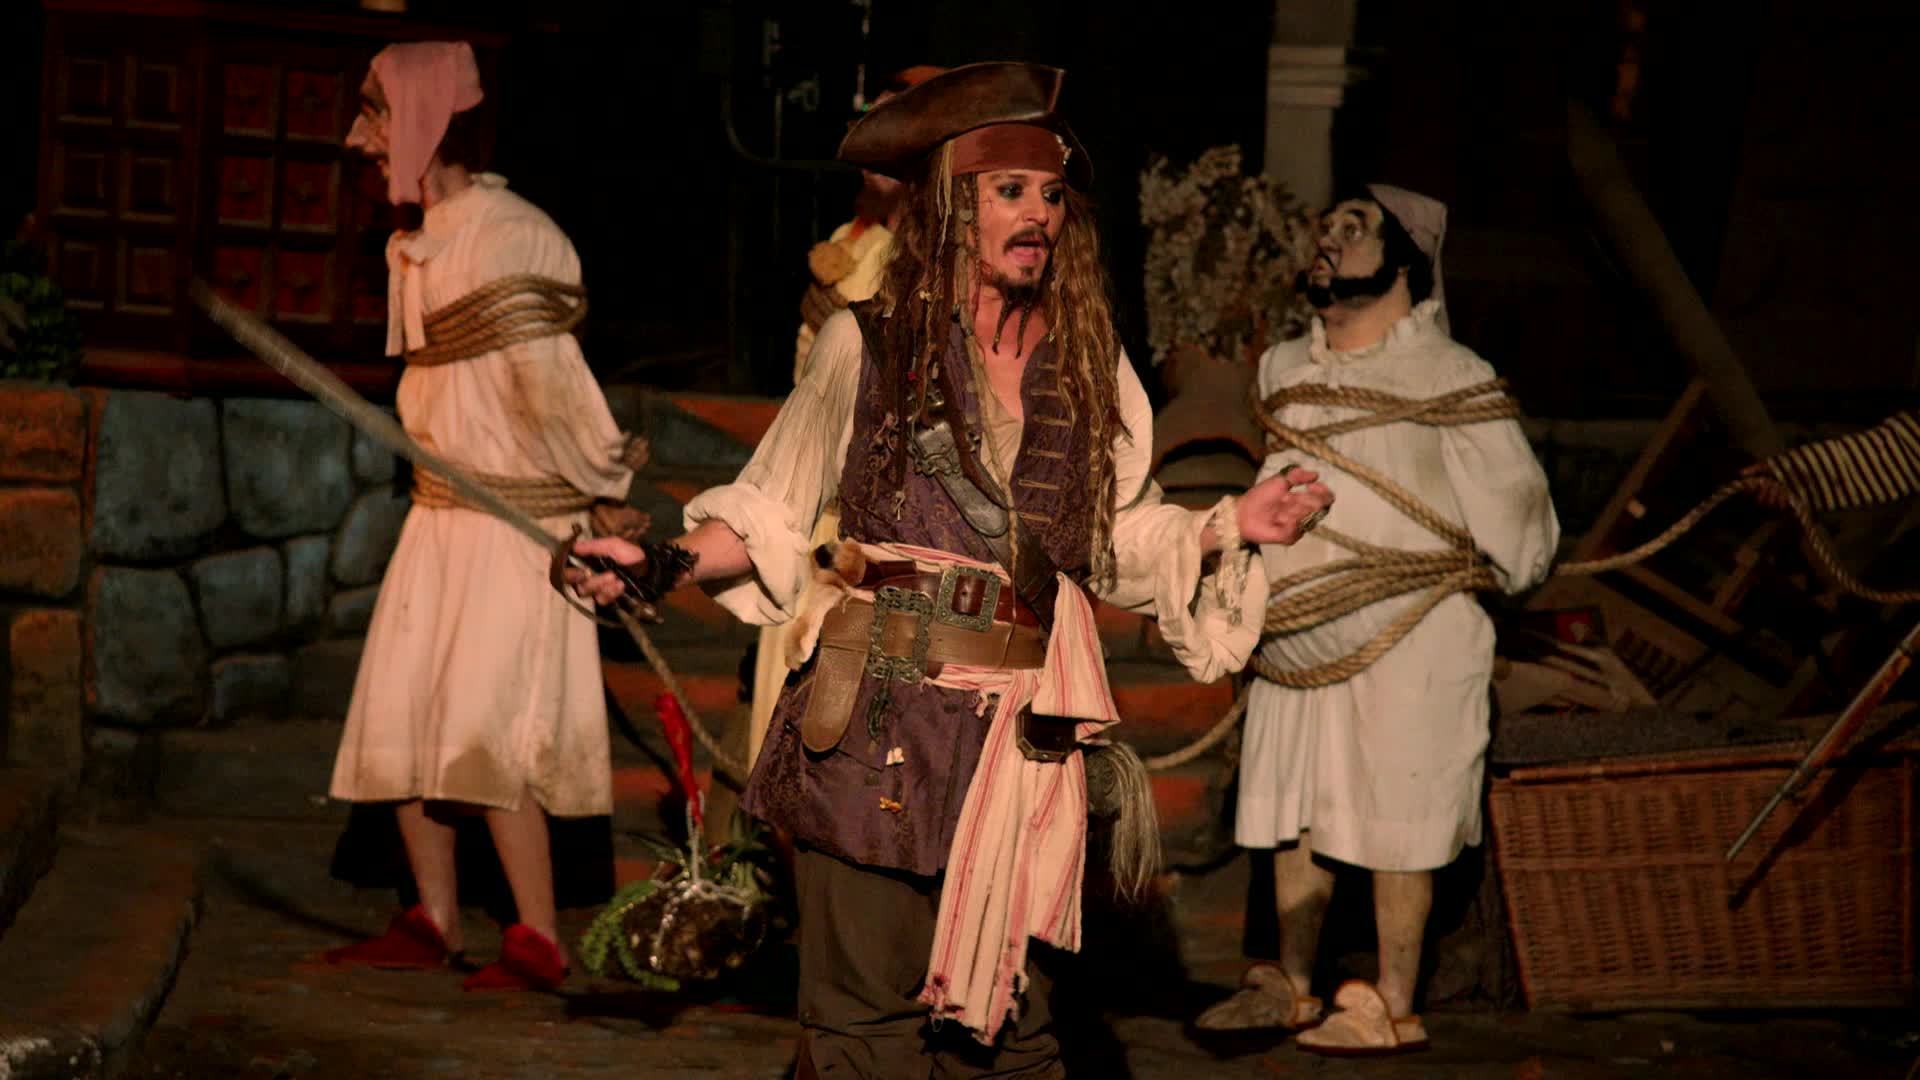 Johnny Depp Surprises Fans as Captain Jack Sparrow at Disneyland!